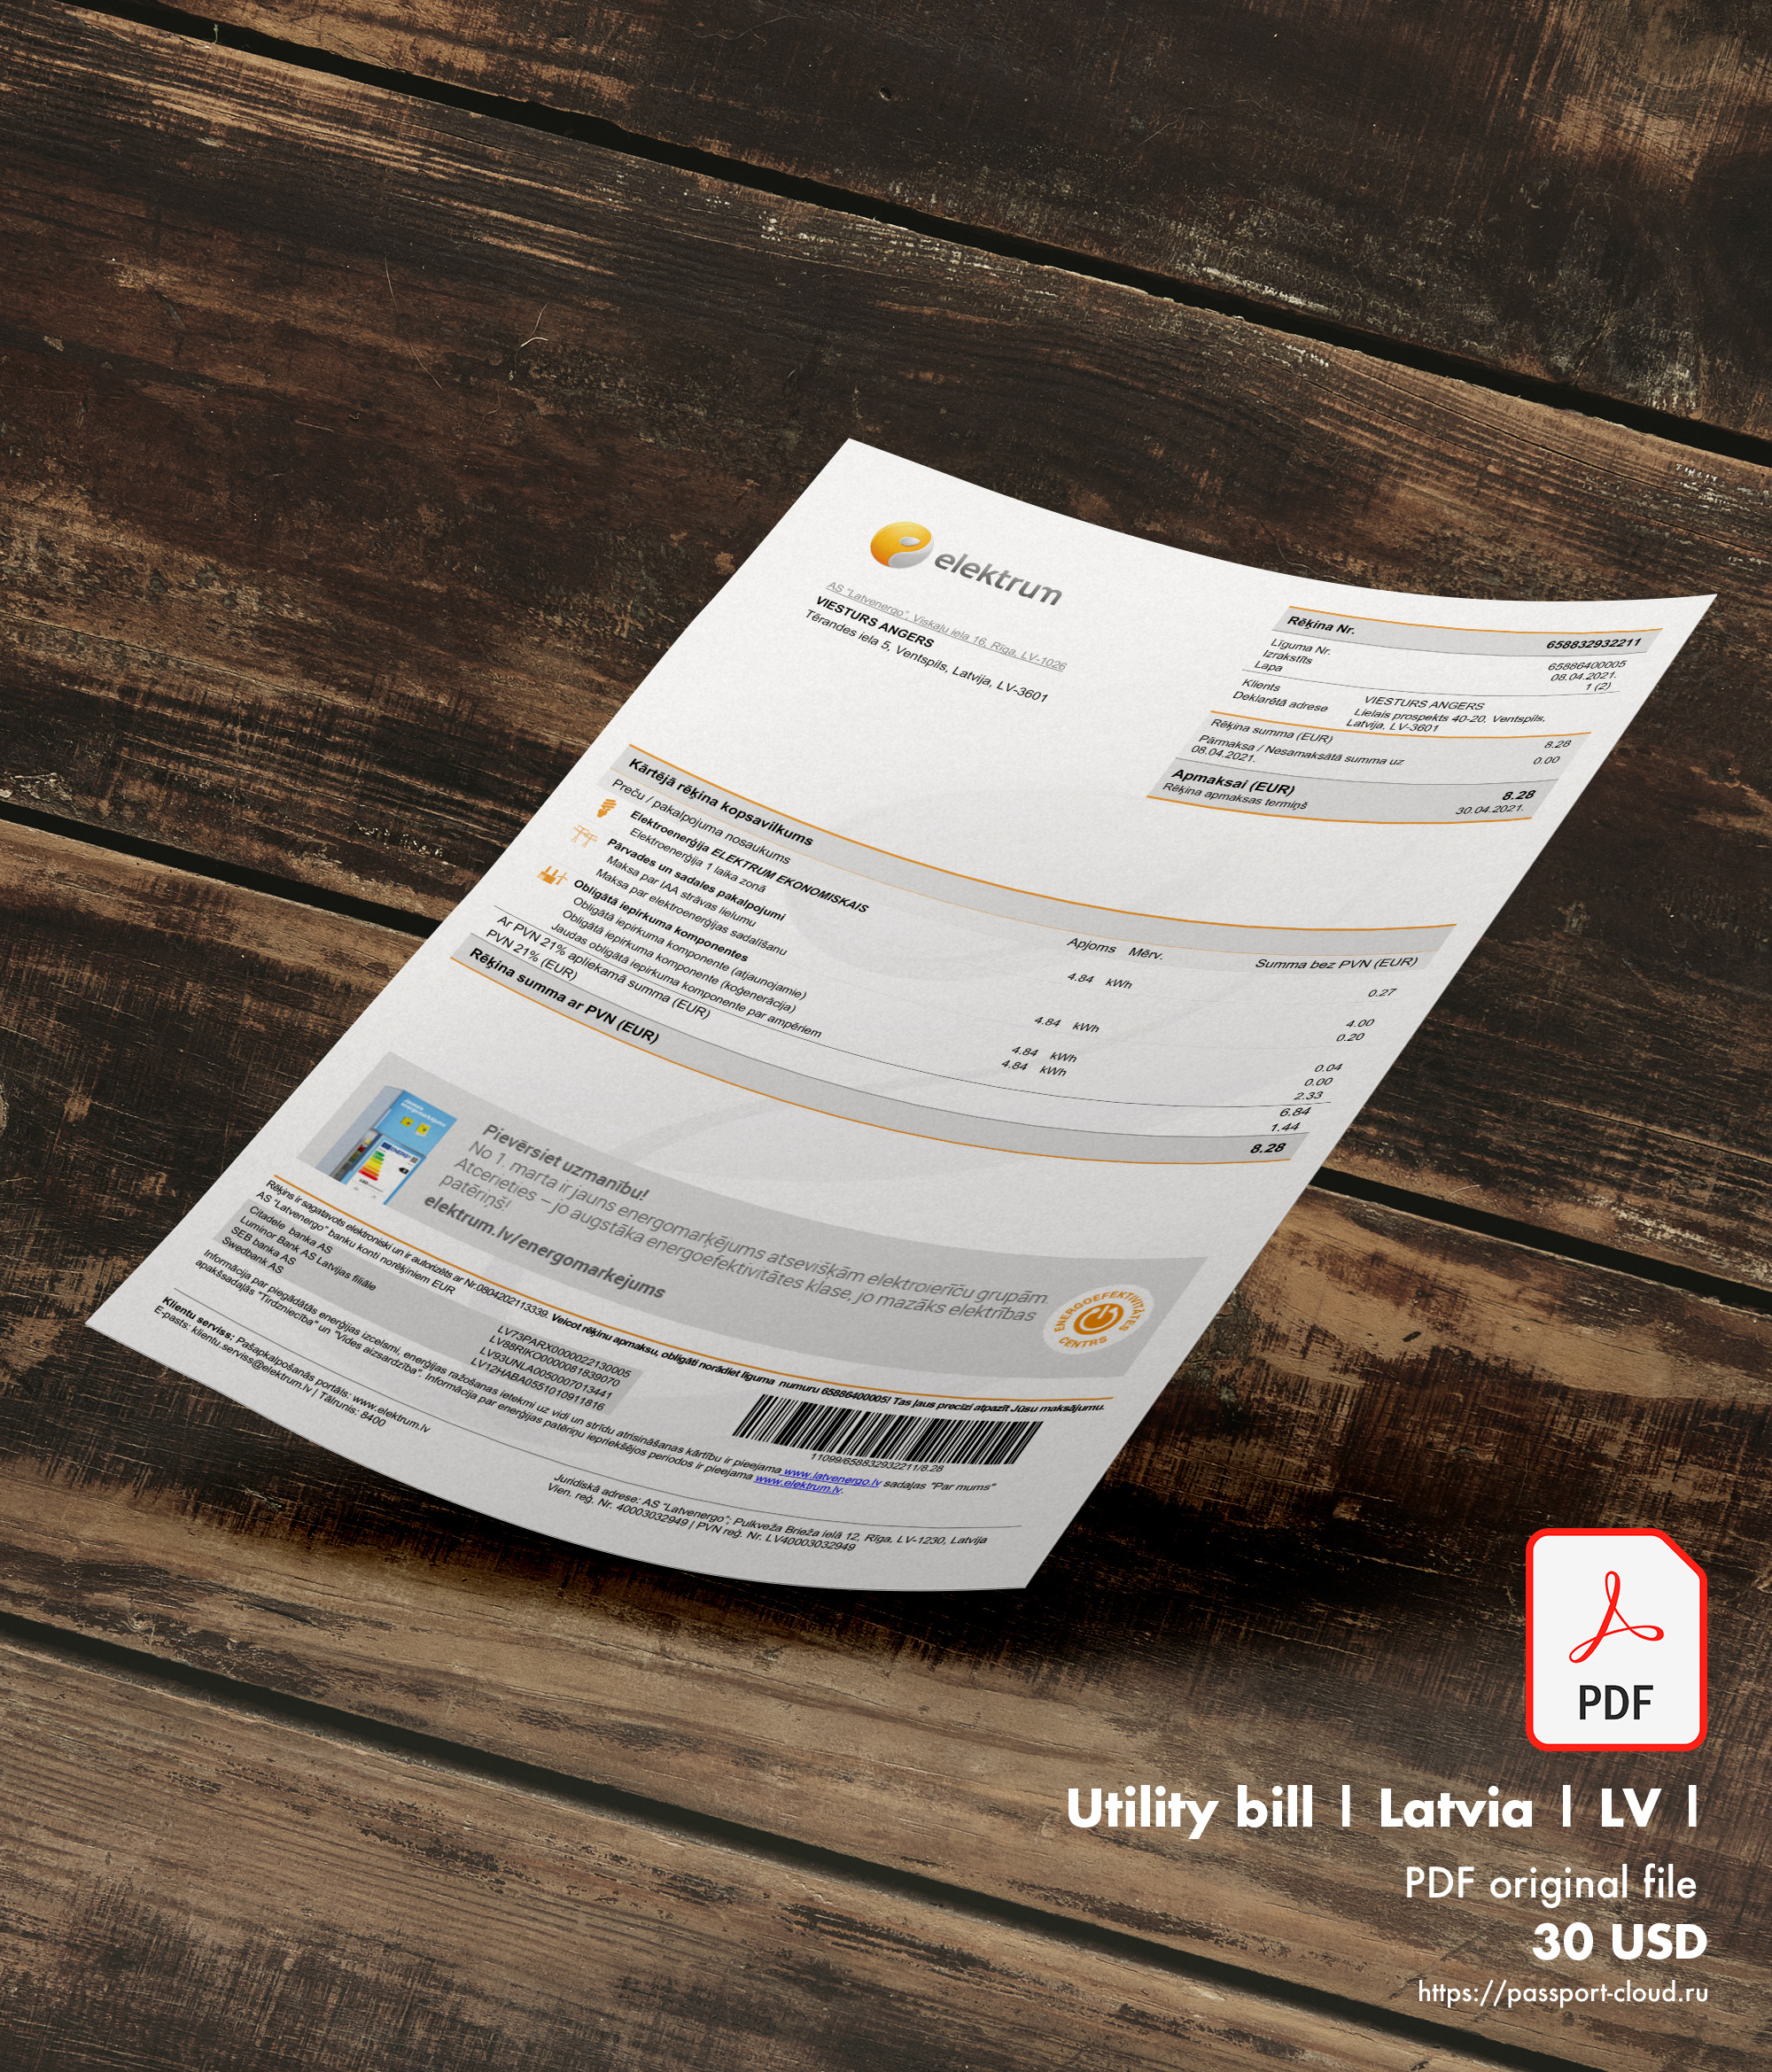 Utility bill  | Latvia1